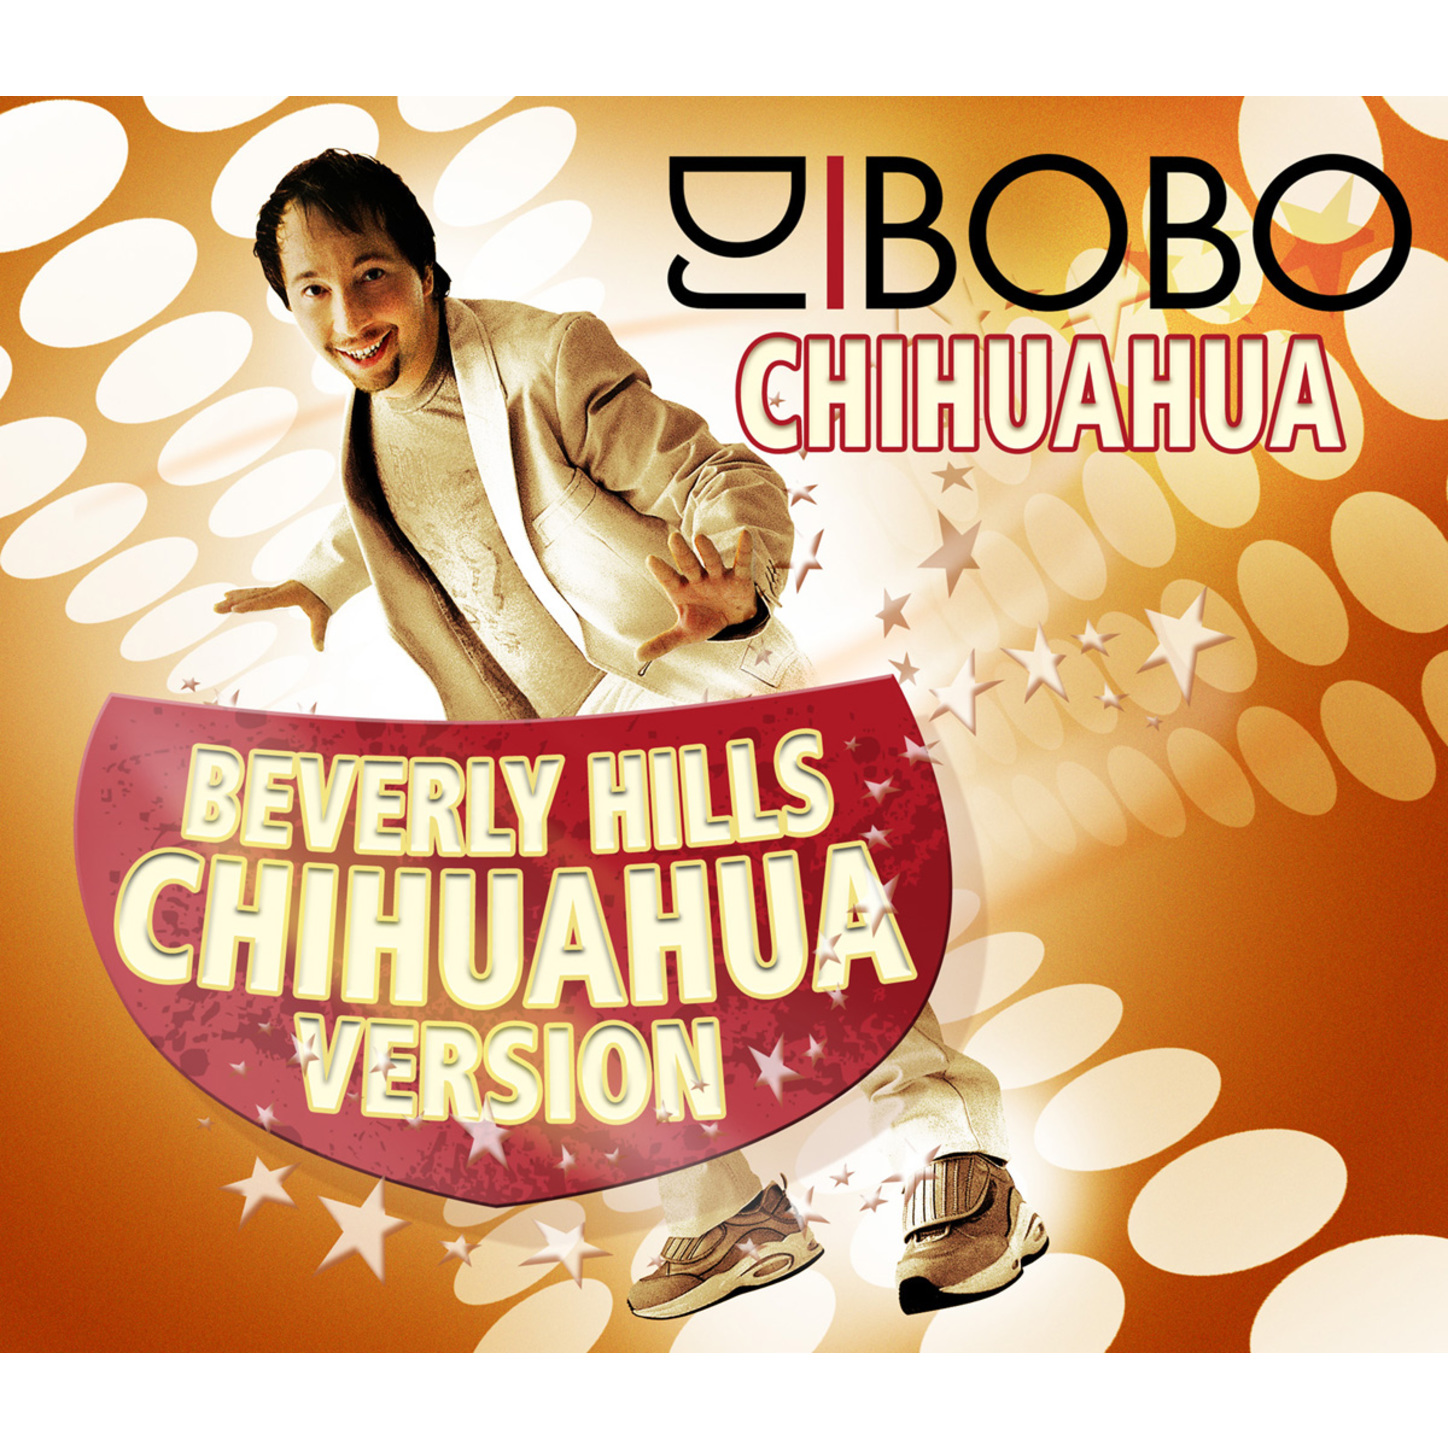 Chihuahua - Beverly Hills Chihuahua Version